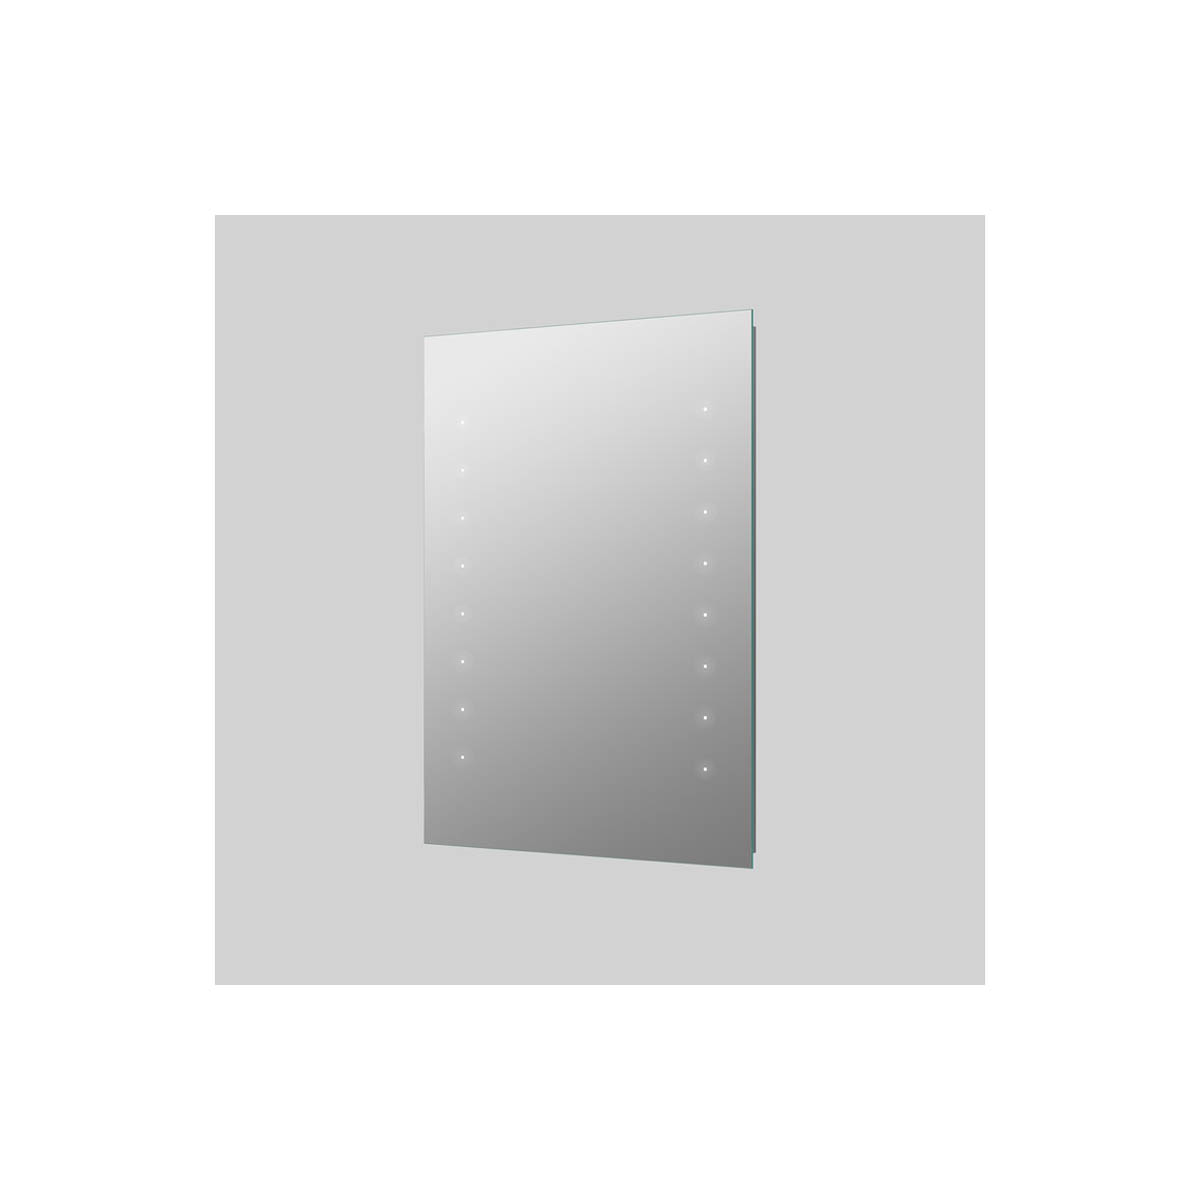 Ari Design Koen 600x800mm Rectangle Battery-Operated LED Mirror